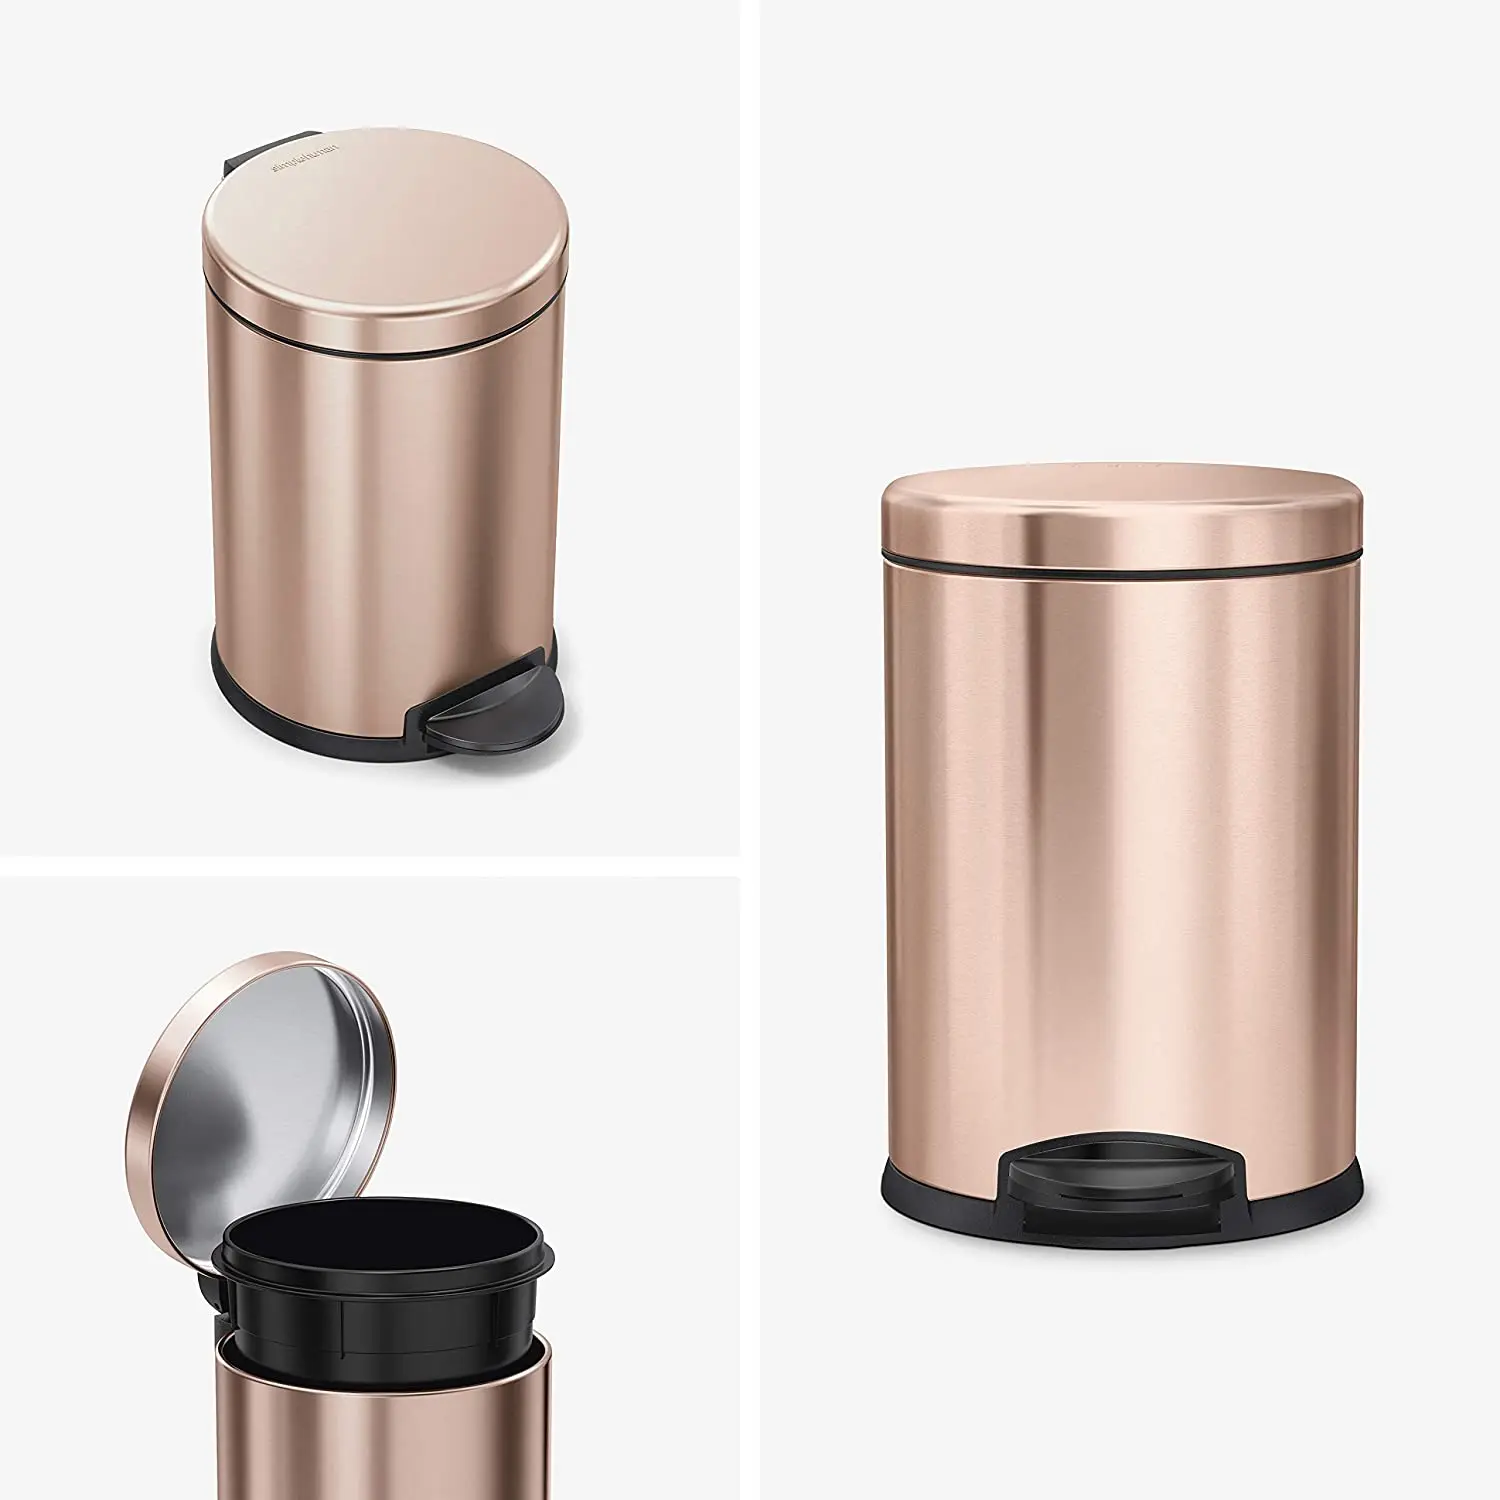 Stainless Steel Trash Can Small Office Bathroom Bin w/ Lid 4.5 Liter/1.2 Gallon 